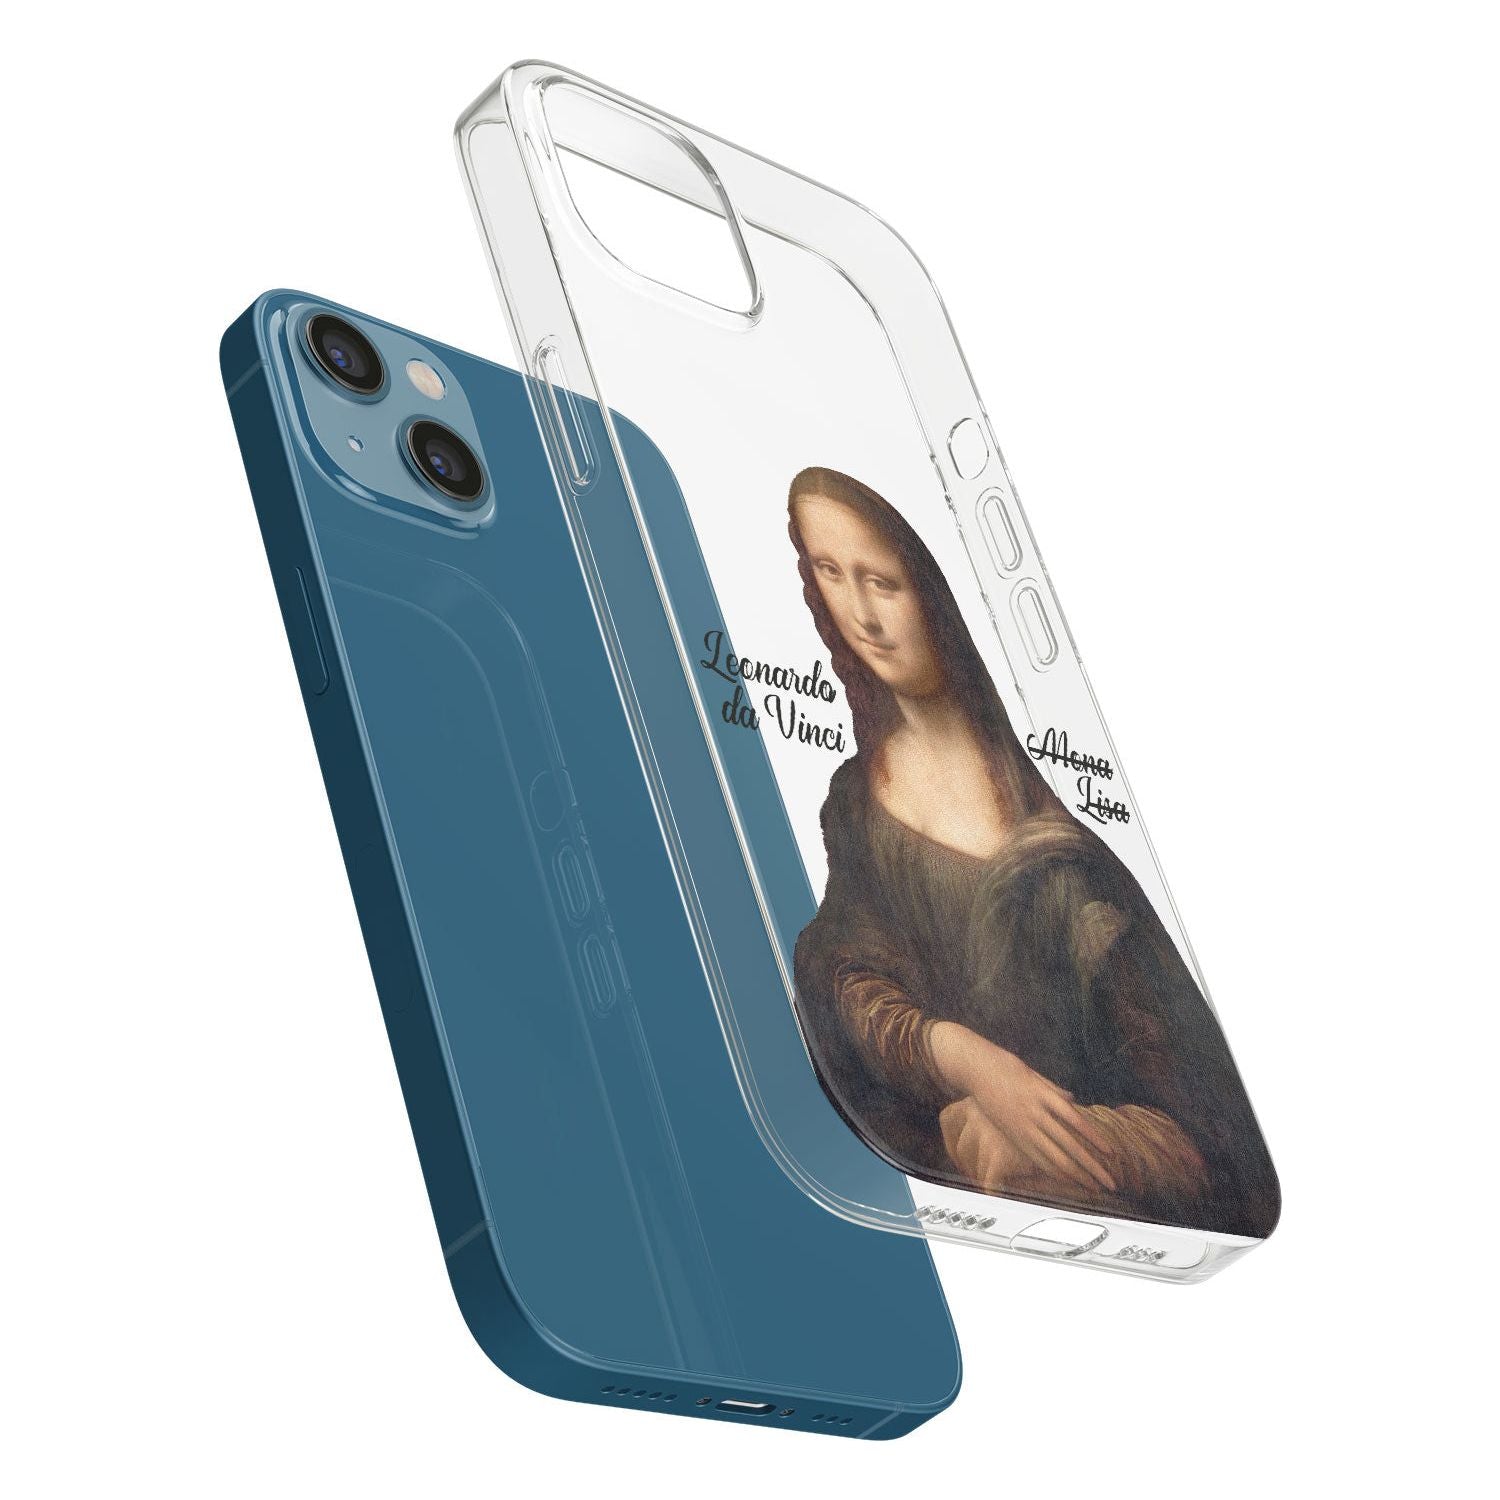 SidewallPhone Case for iPhone 13 Mini